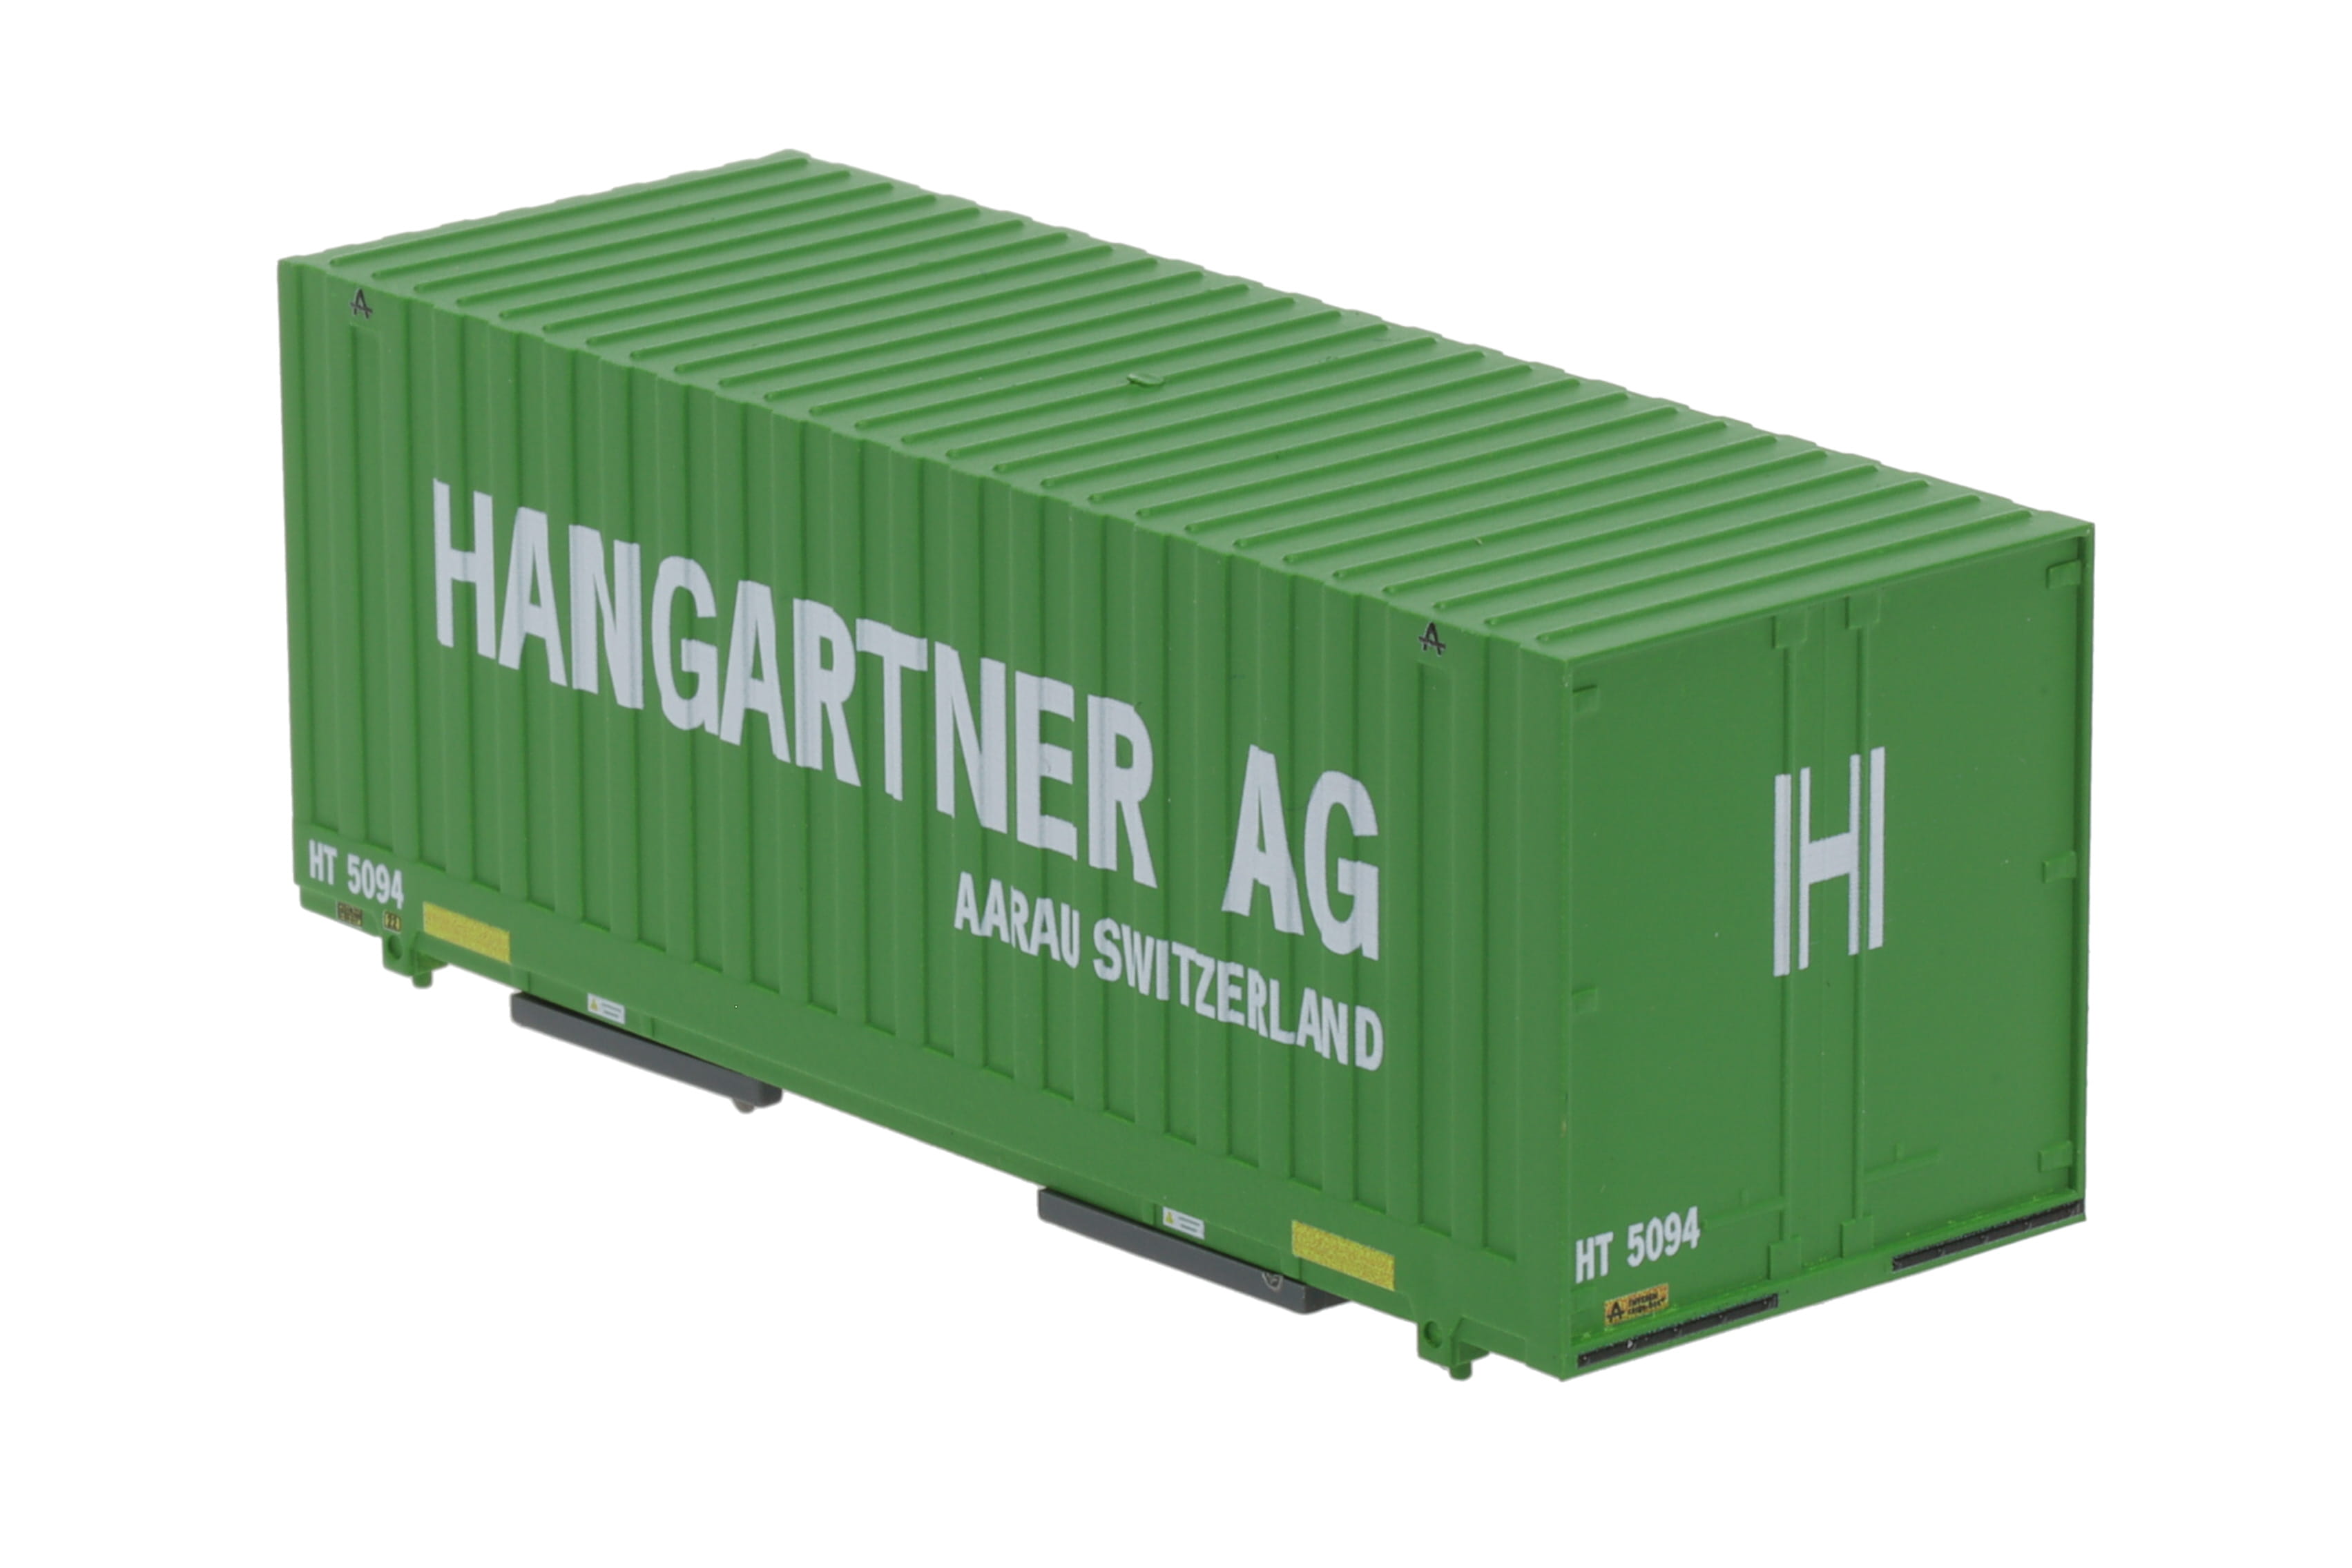 1:87 Container WB-C715 "Hangartner"